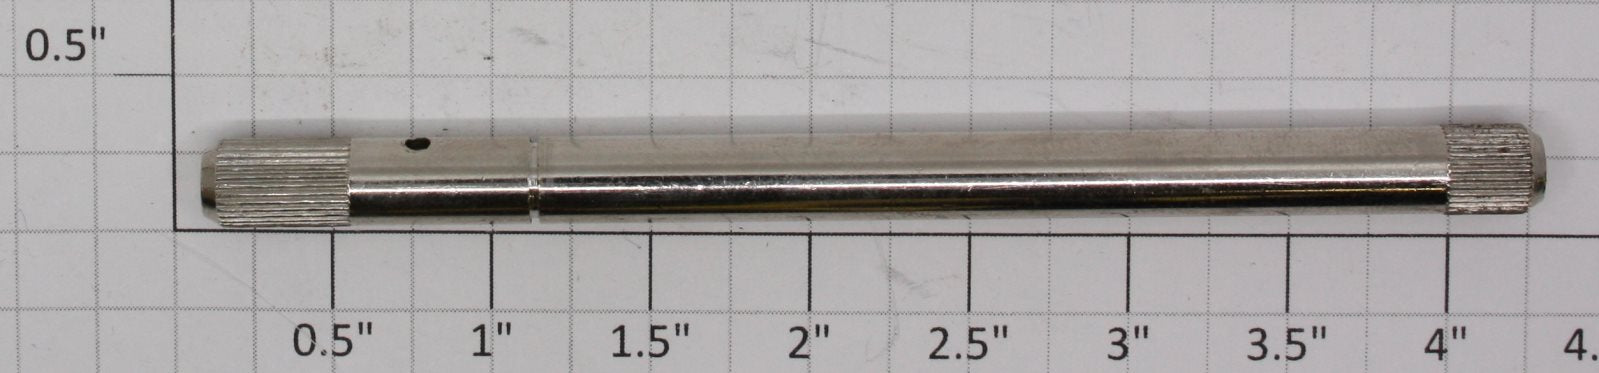 Lionel ZW-2859 Shaft/Pin